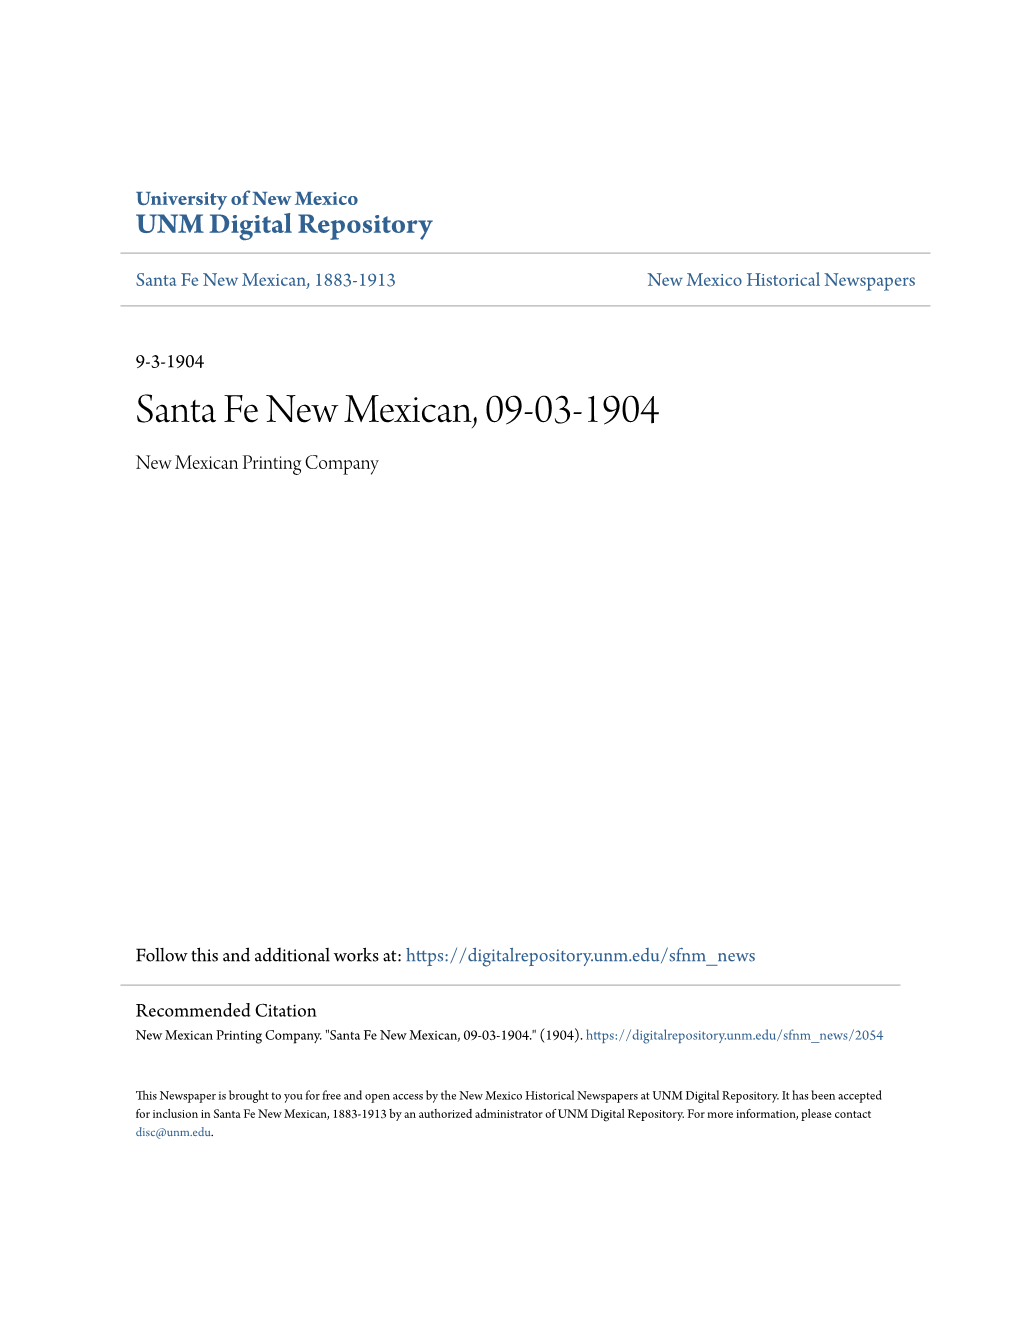 Santa Fe New Mexican, 09-03-1904 New Mexican Printing Company